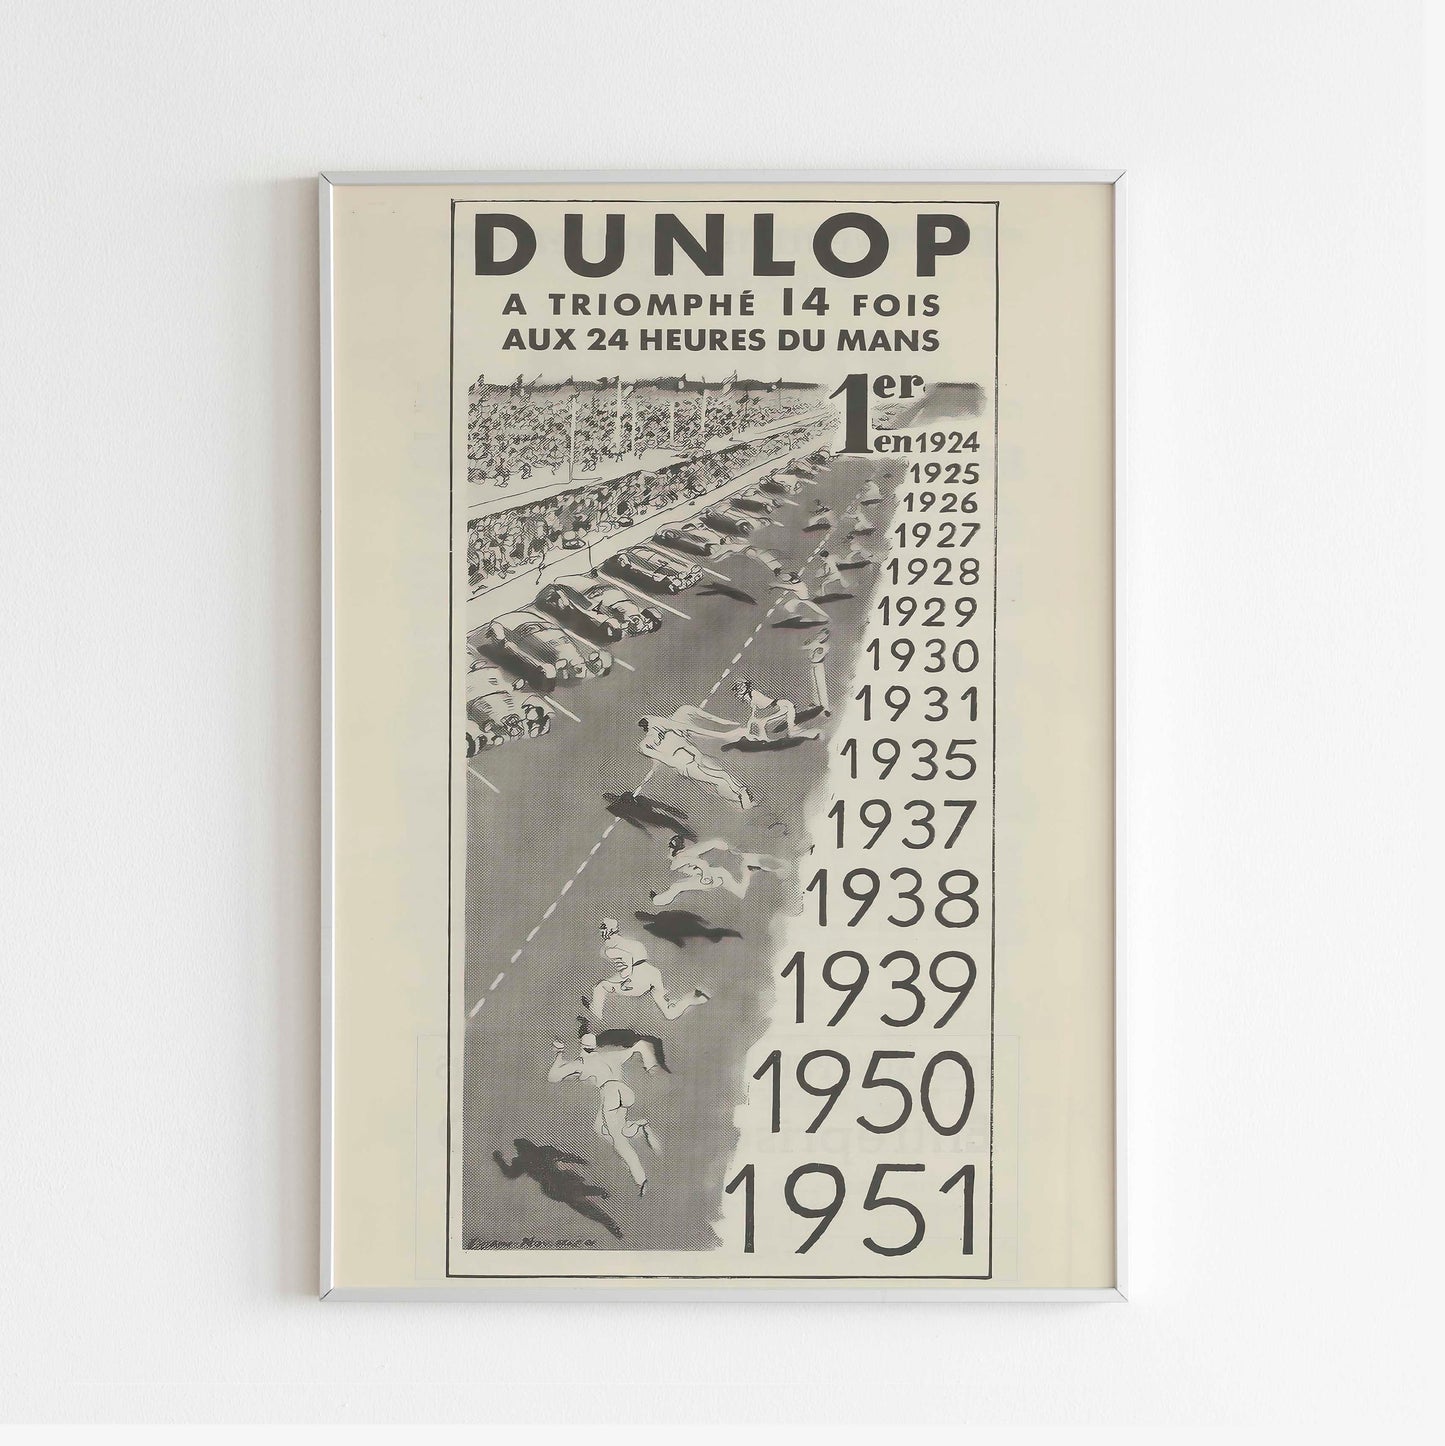 Dunlop Le Mans 24 Magazine Advertising Poster, Sport Car Tires Champions 50s Style Print, Vintage Design, Racing Ad Wall Art, Magazine Retro Advertisement